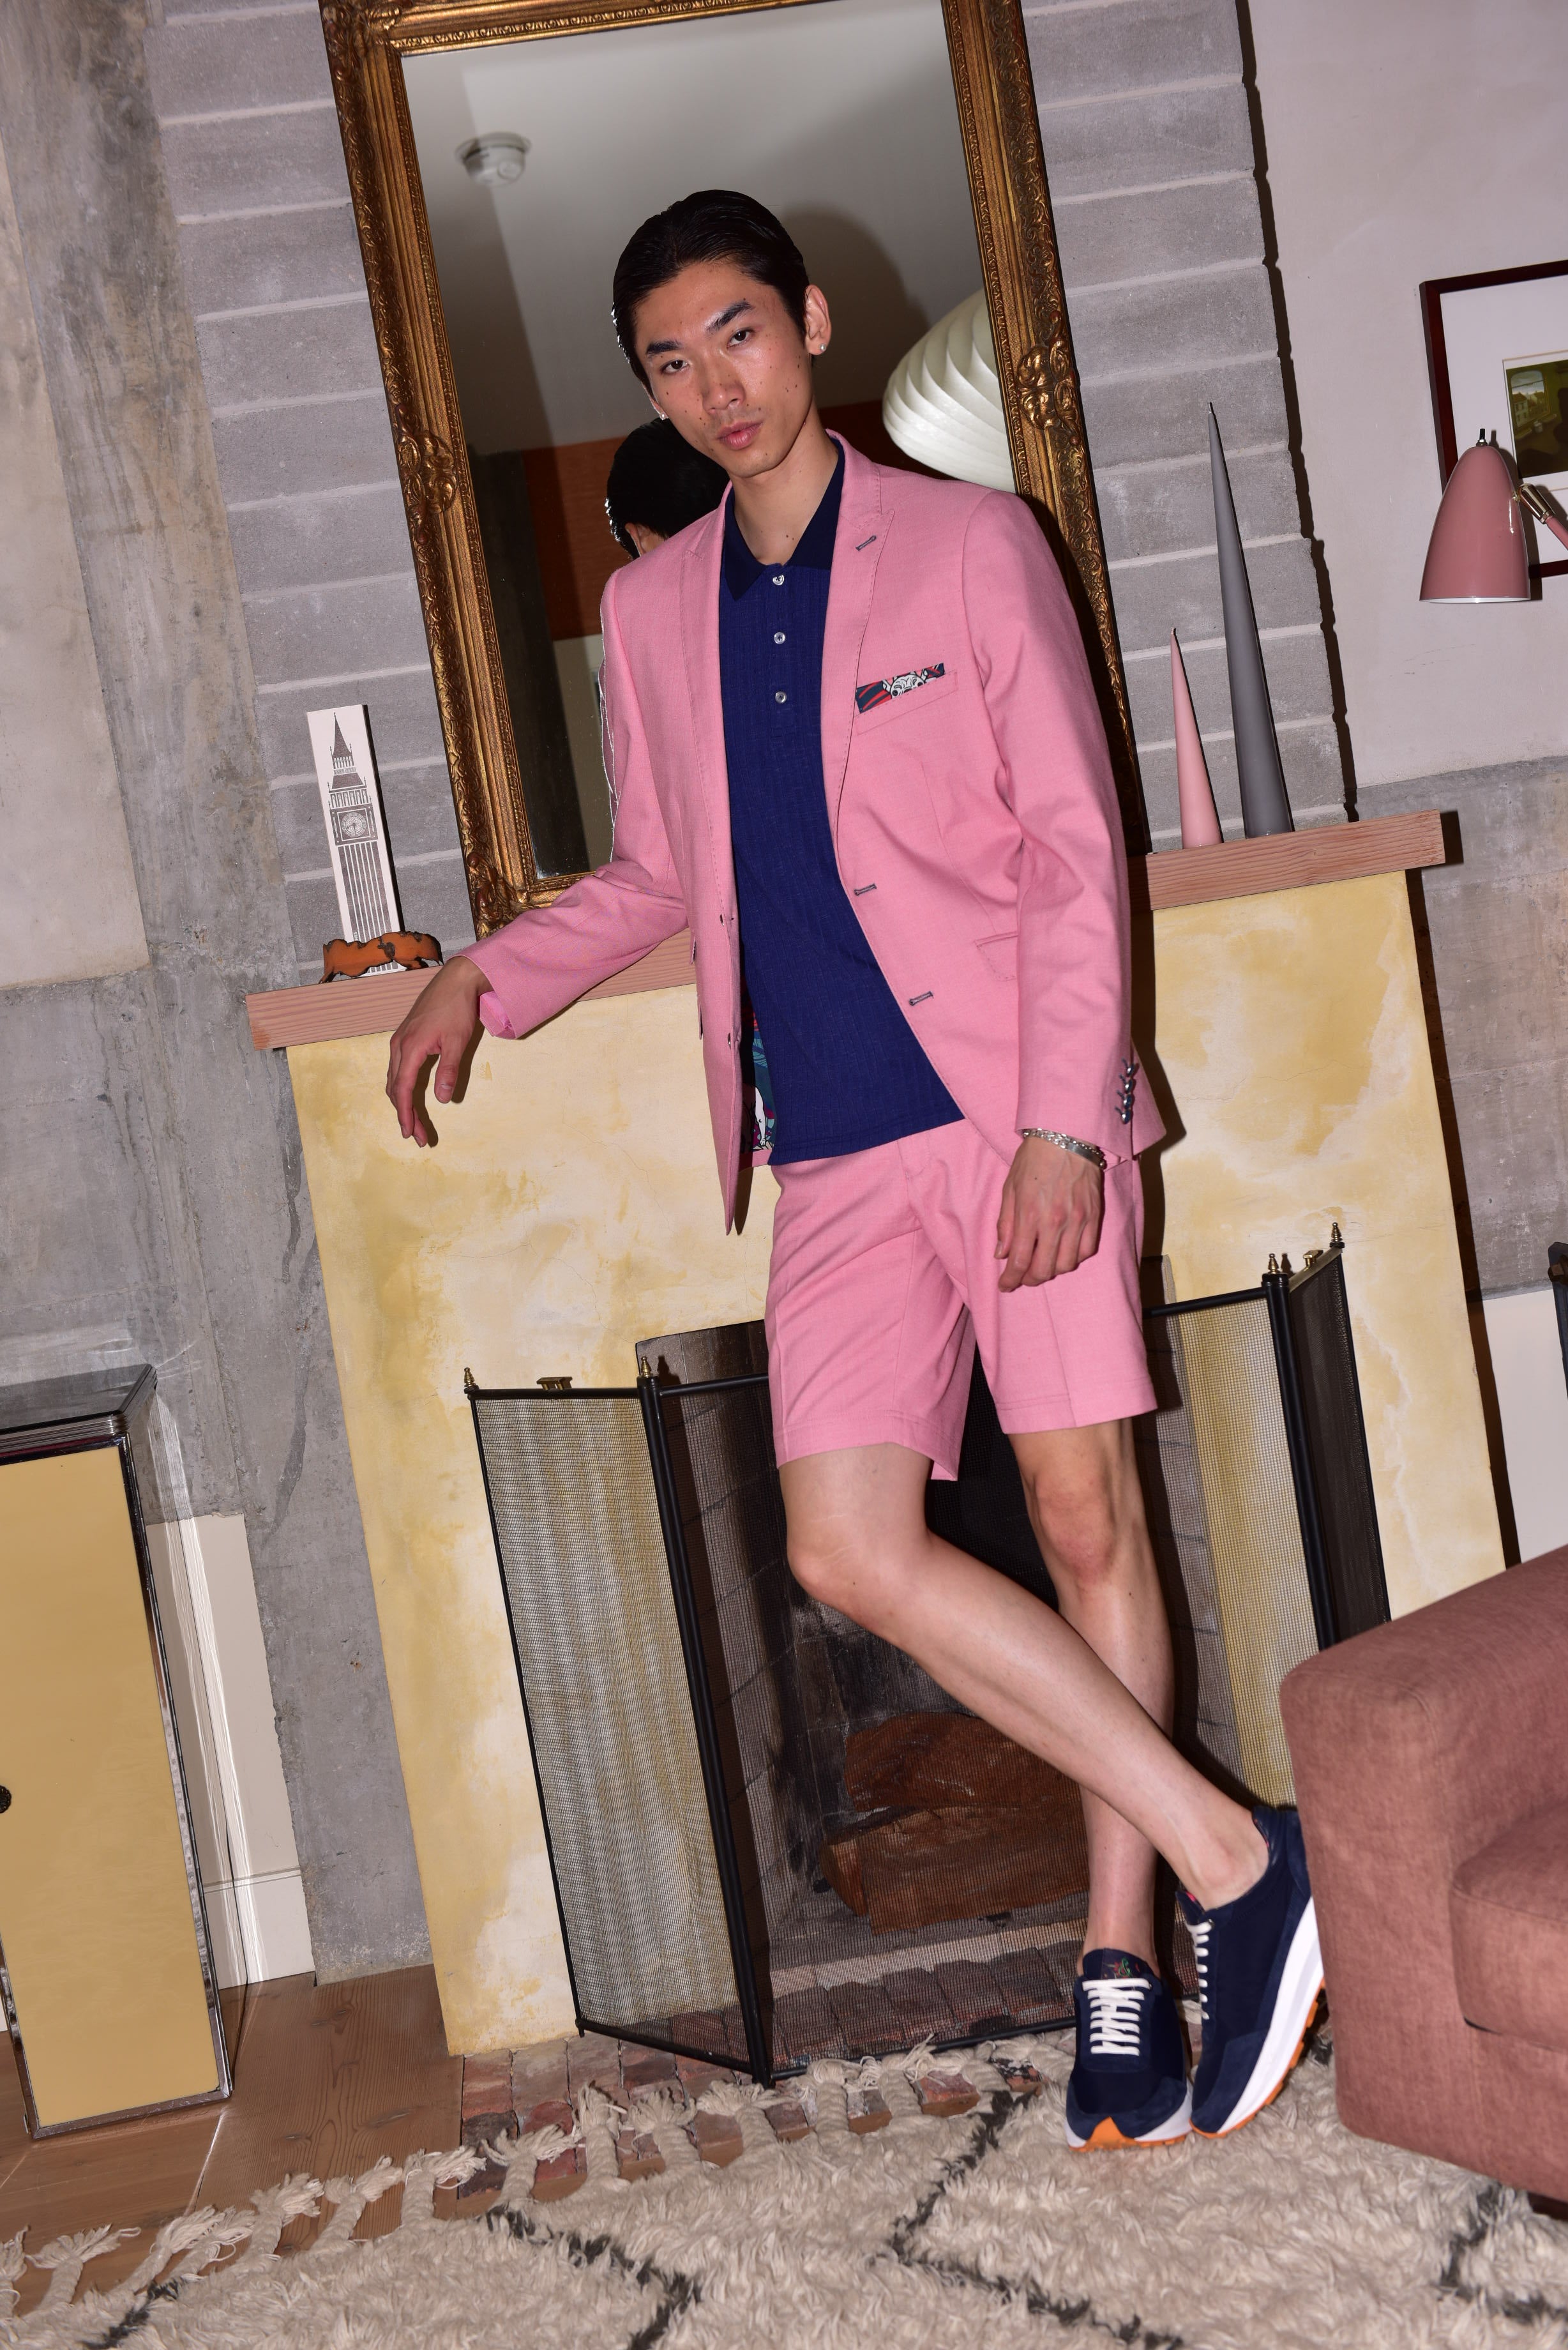 Fairview Shorts - slim - Pink Carnation